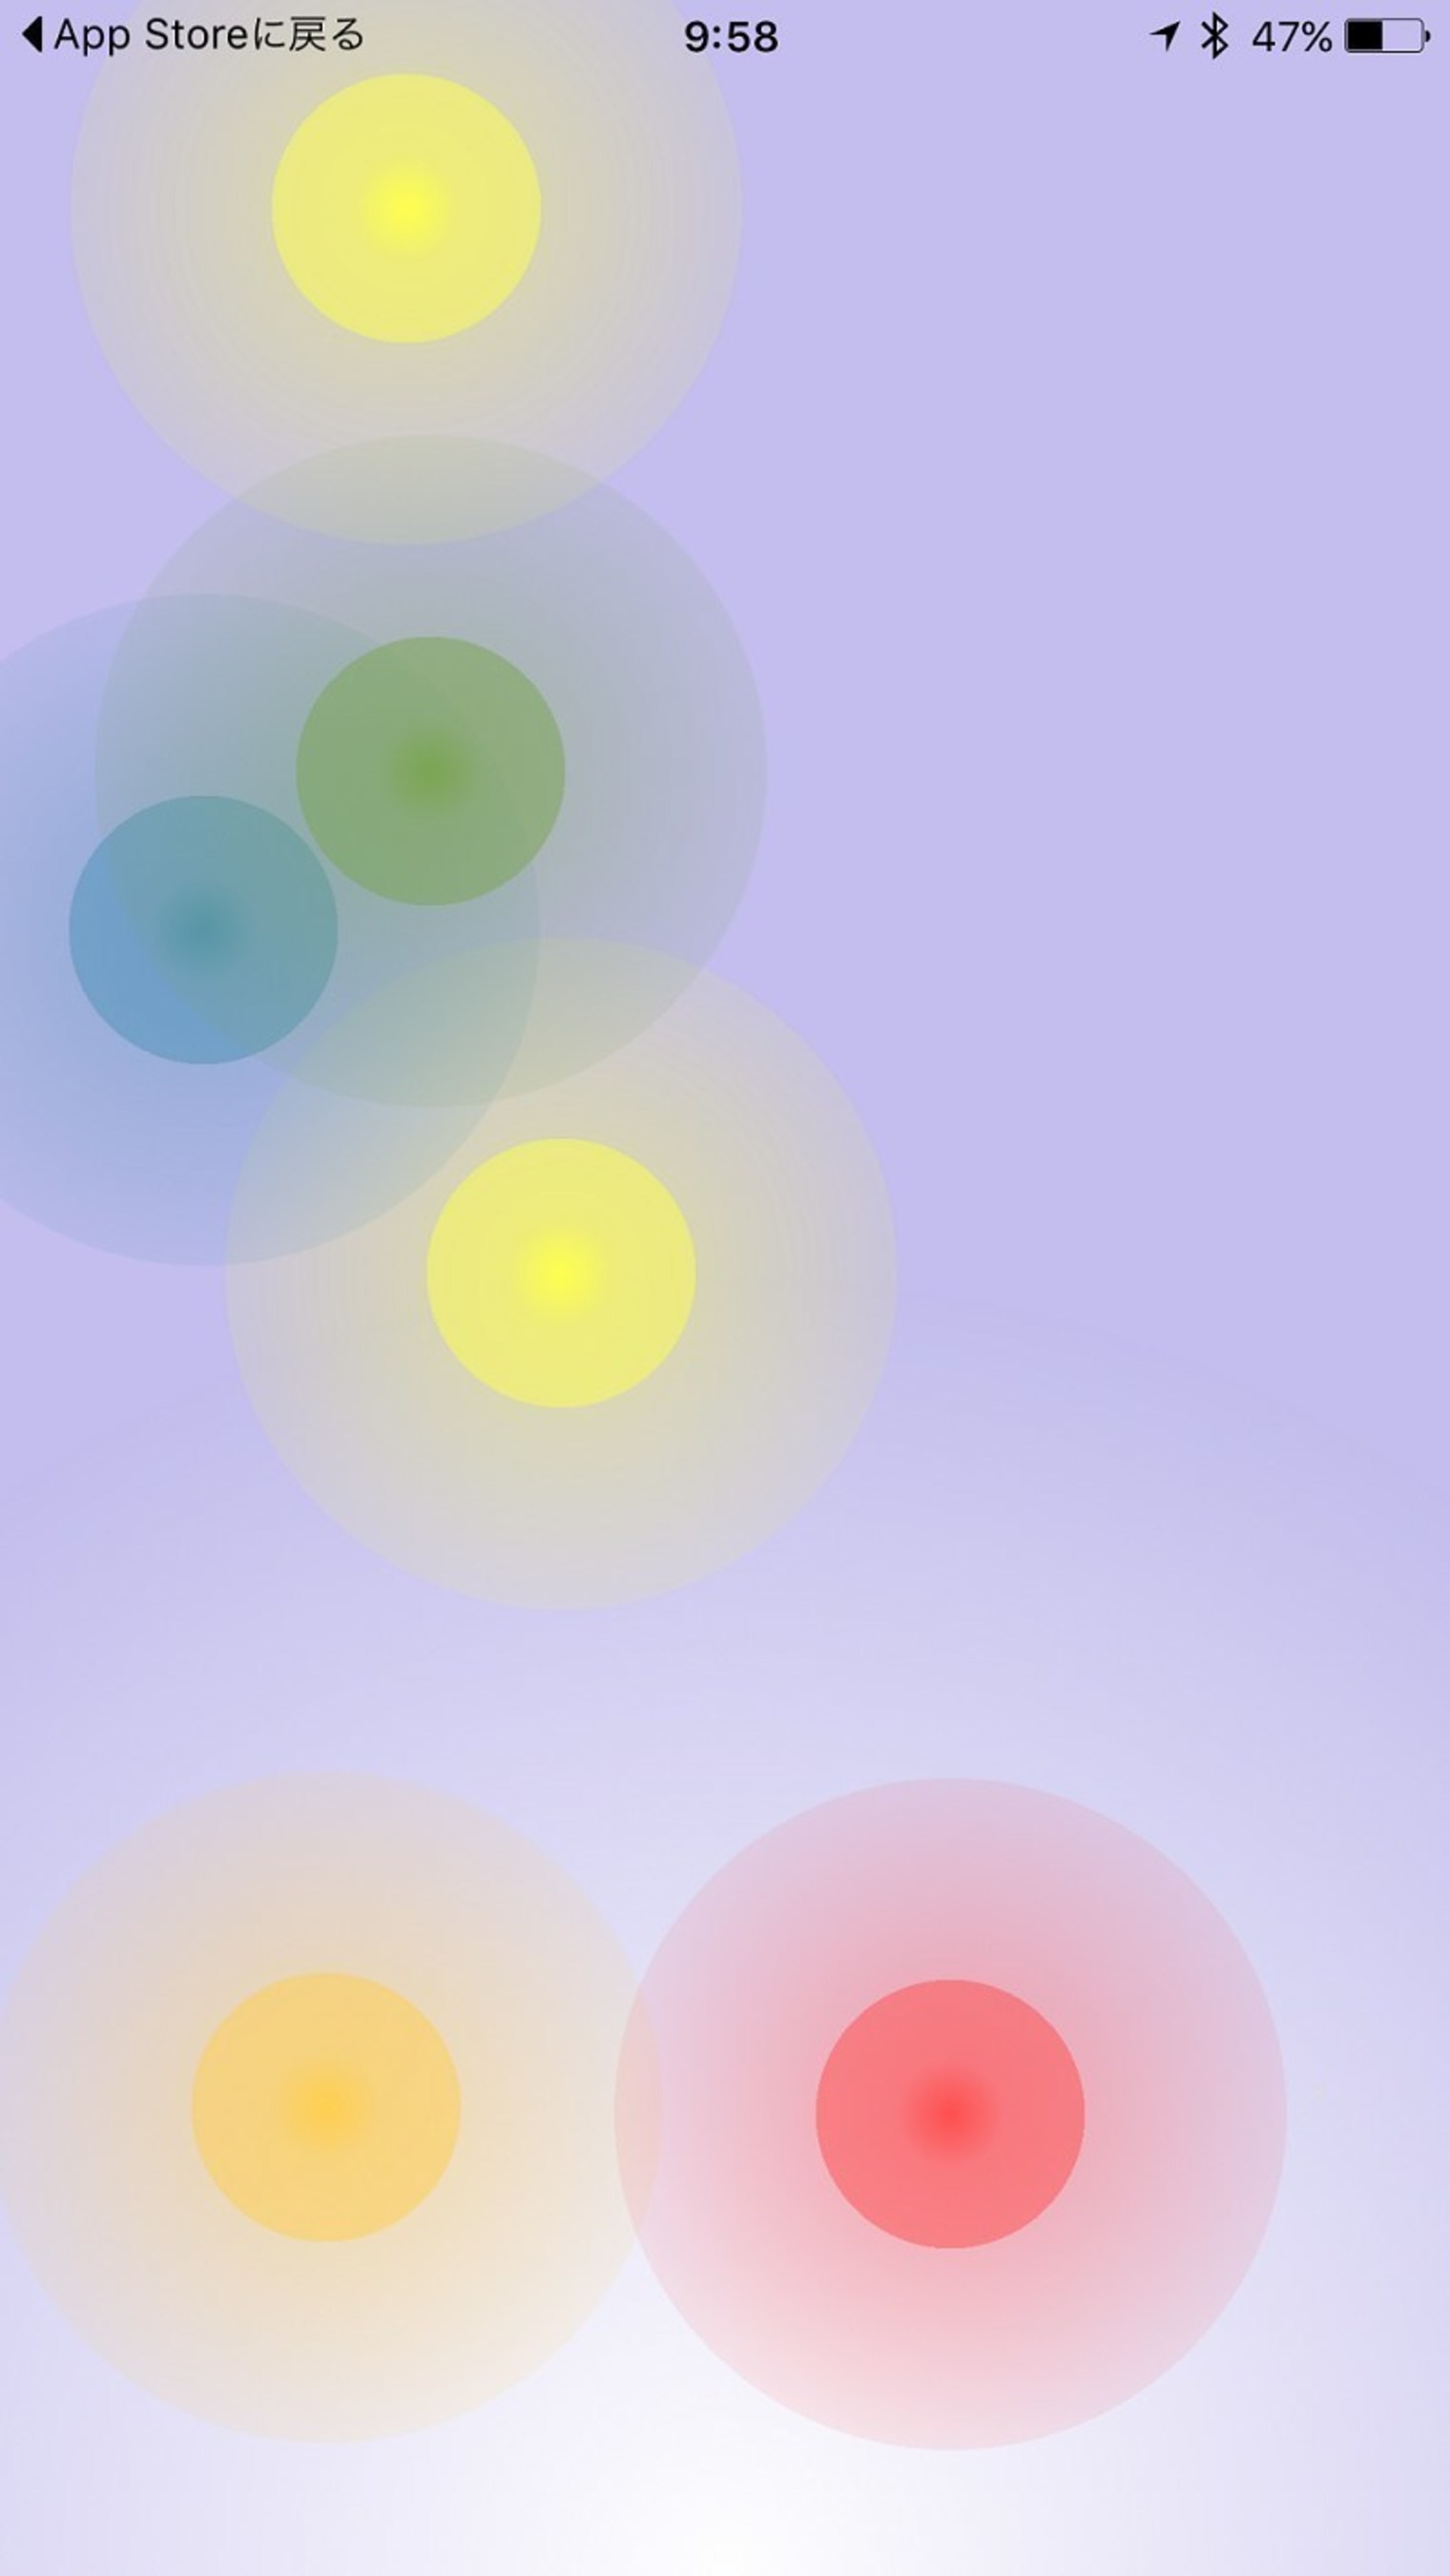 The app represents emotions through the color mood balls.